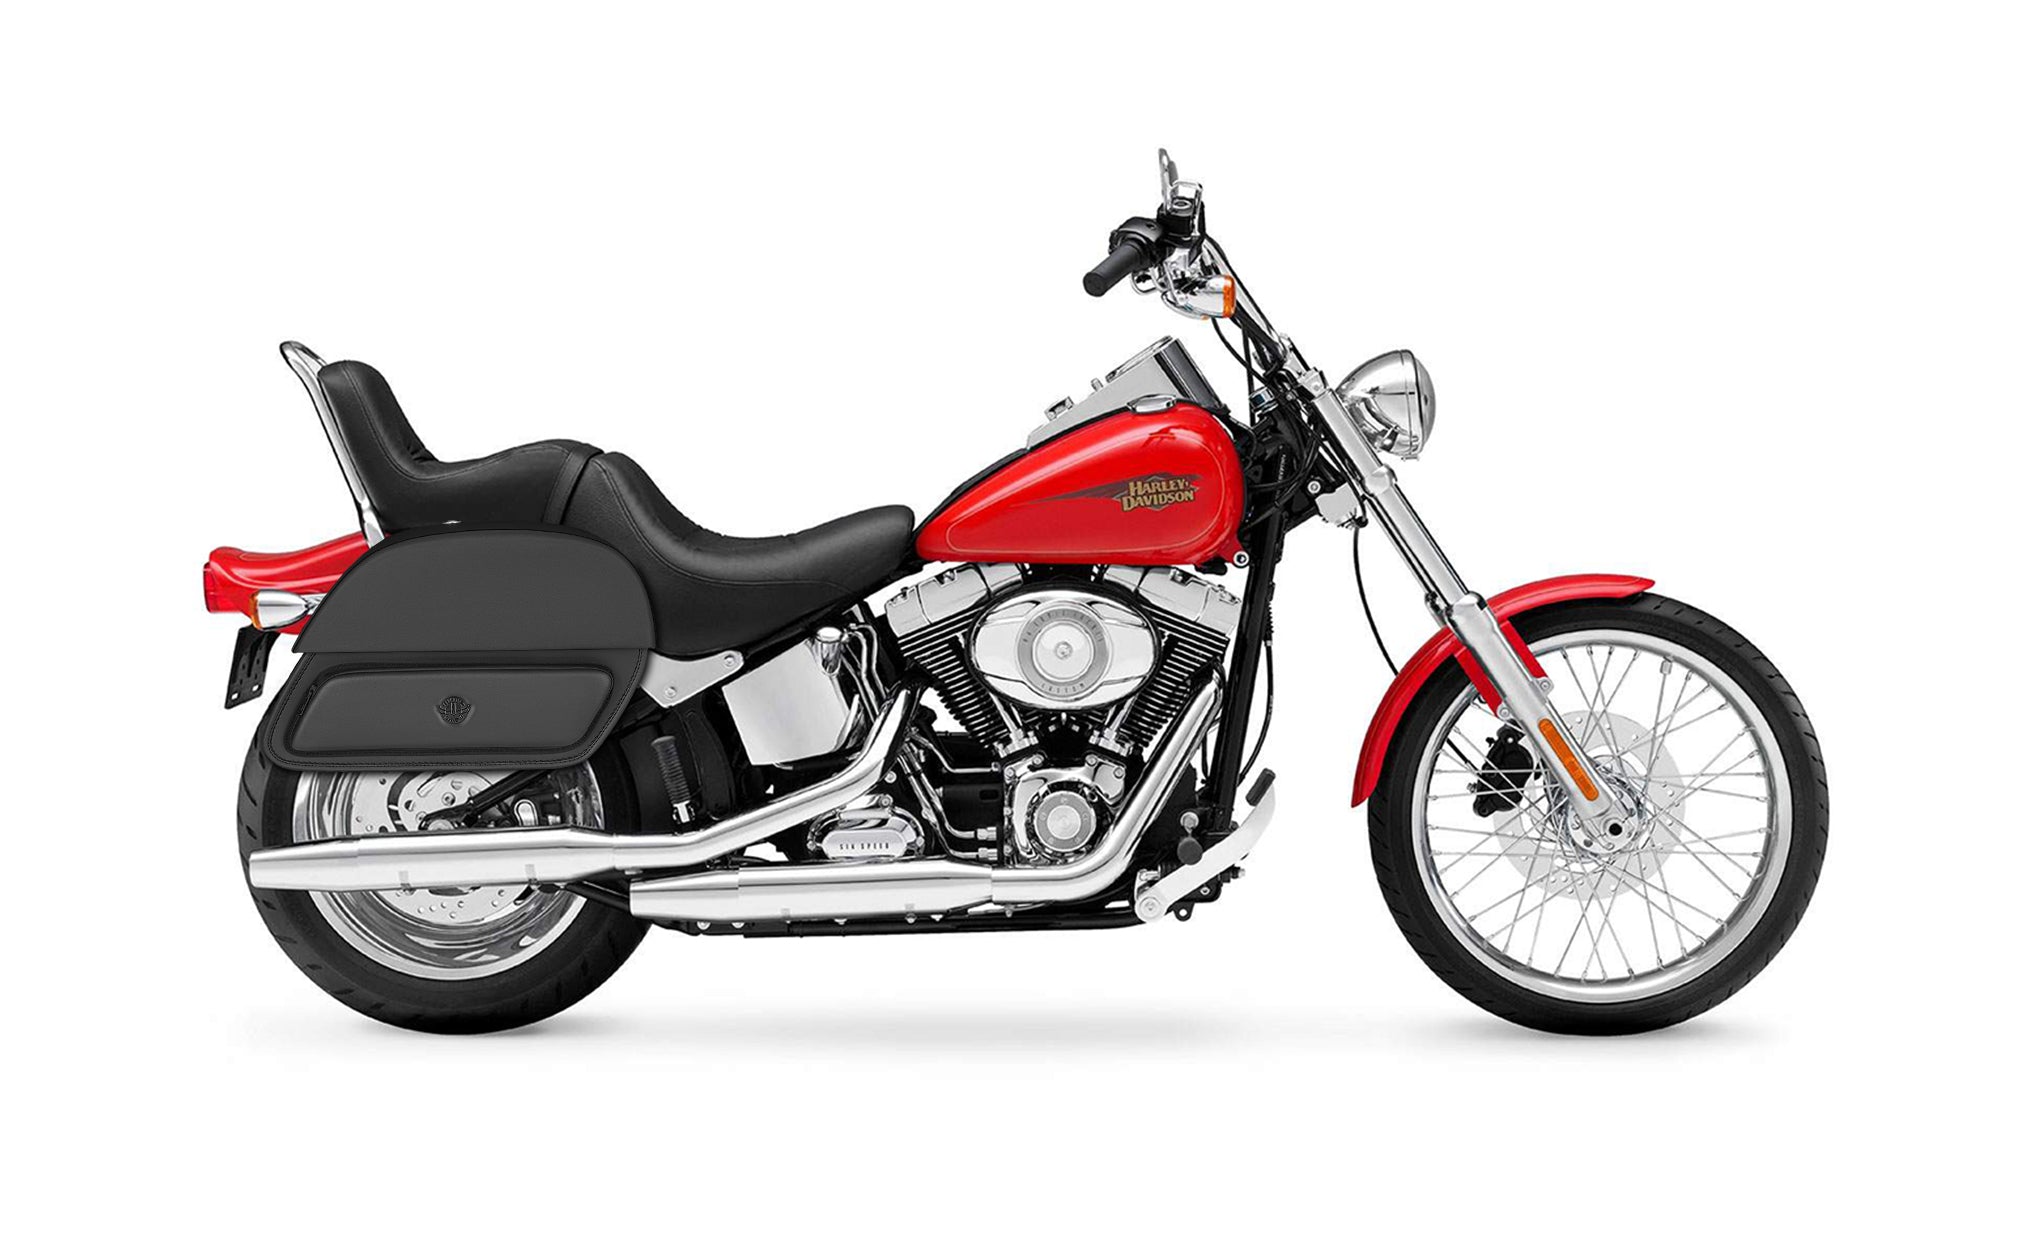 28L - Pantheon Medium Motorcycle Saddlebags for Harley Softail Custom FXSTC